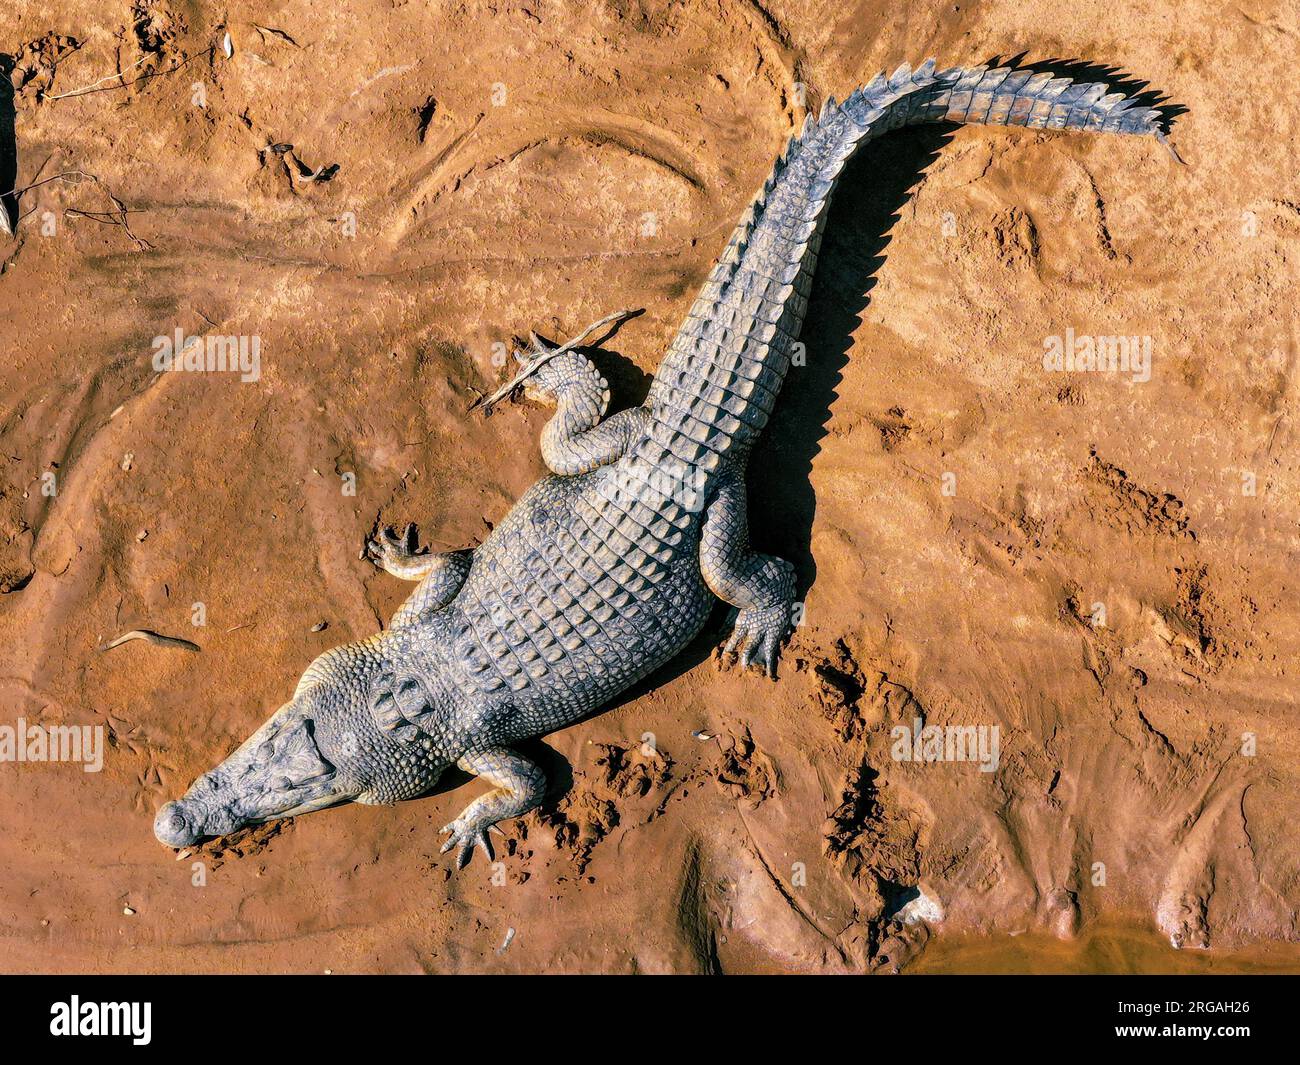 Large saltwater crocodile from bird's eye view drone, Australia Stock Photo  - Alamy